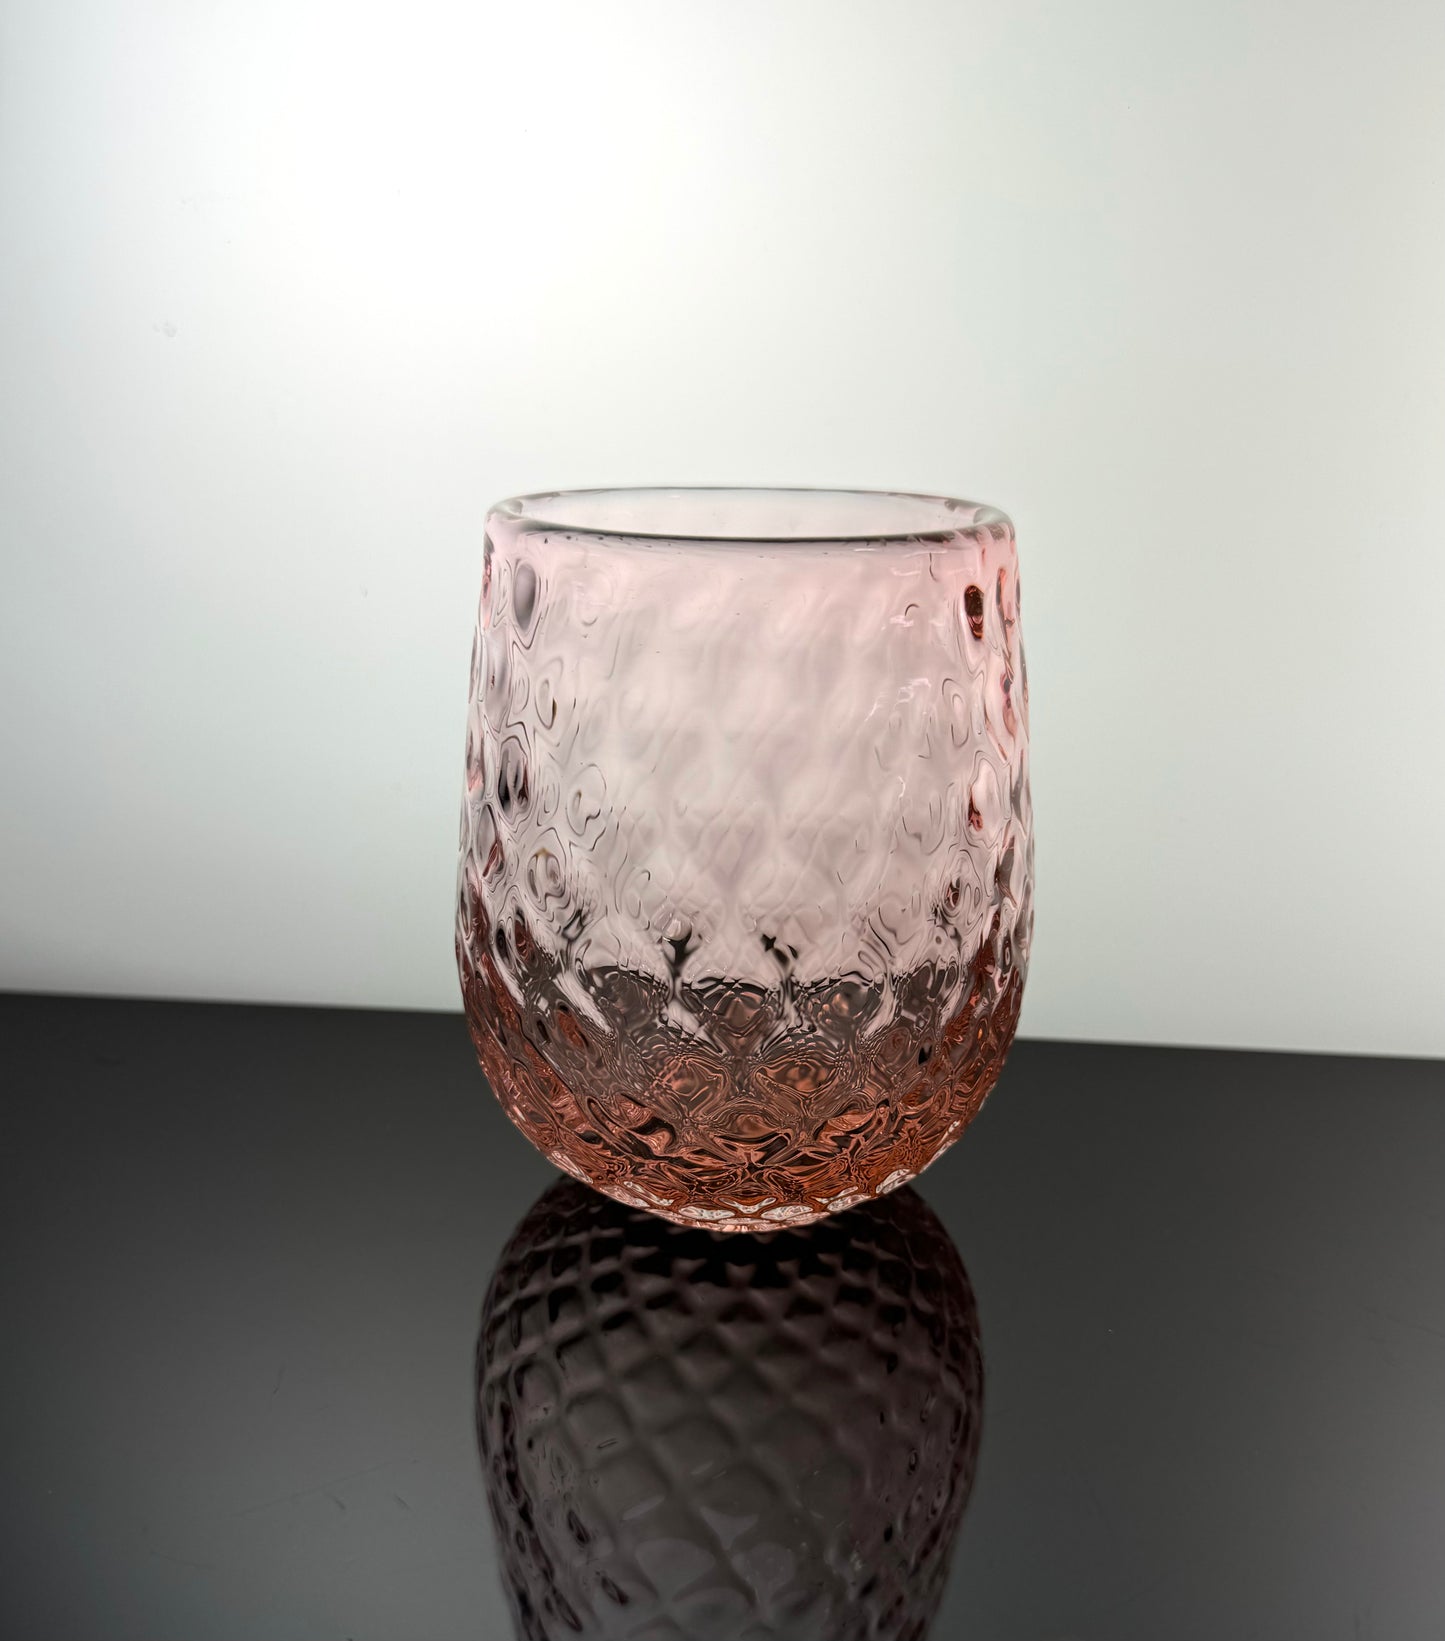 Aurora Wine Glass